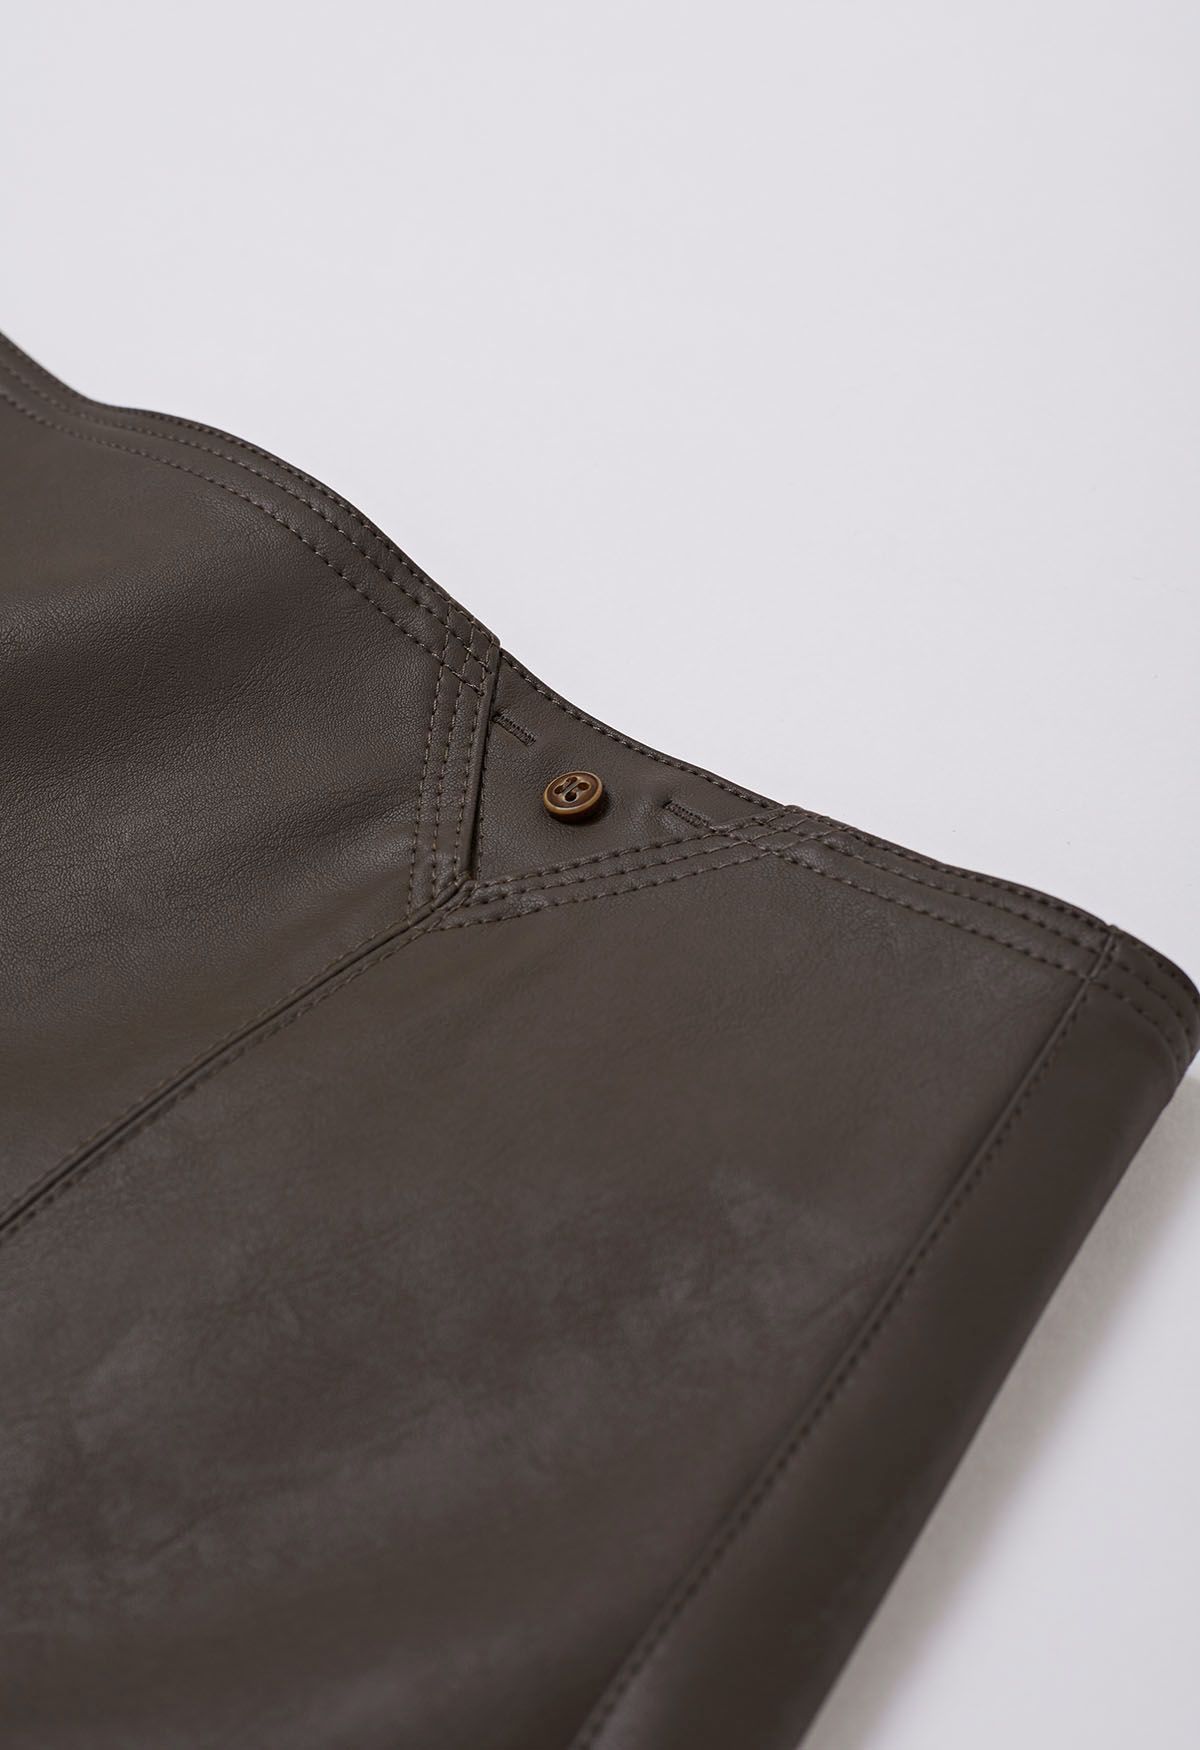 Mini-jupe en similicuir bordée de boutons en marron